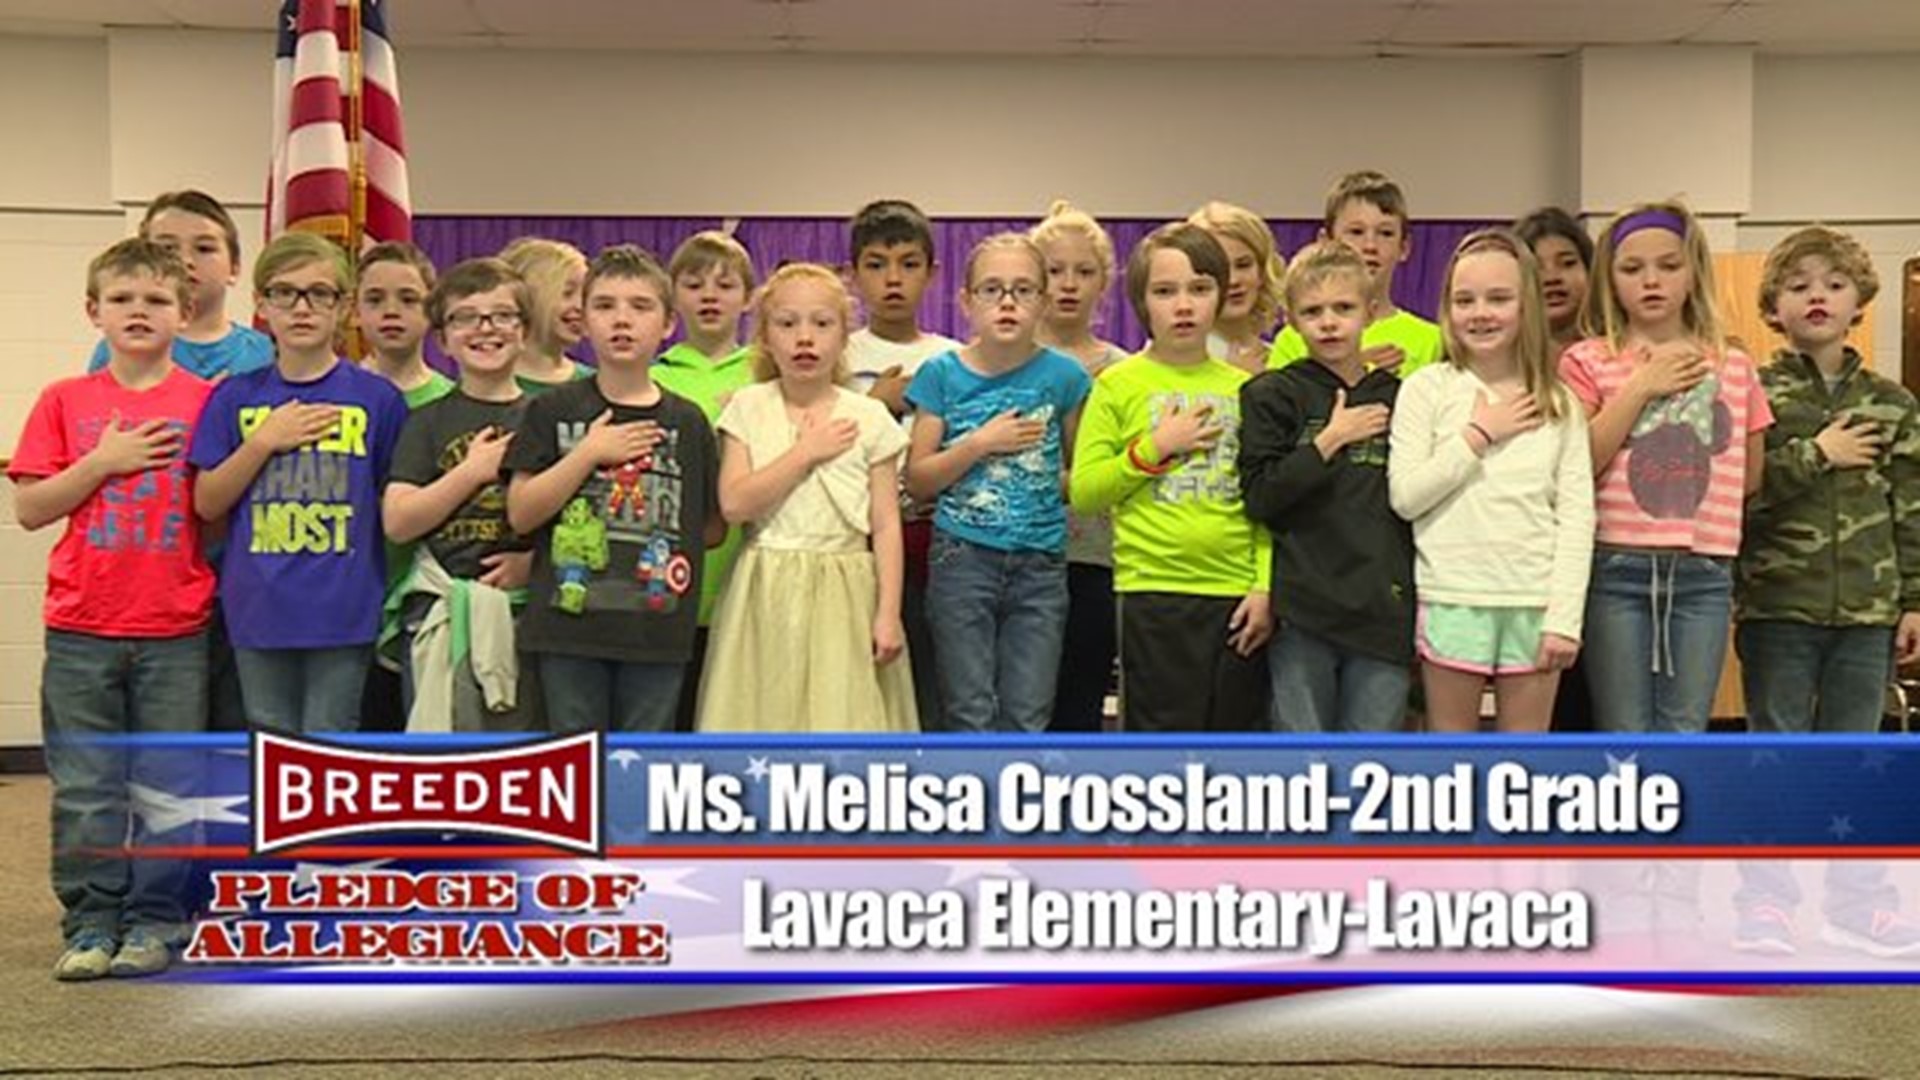 Lavaca Elementary, Lavaca - Ms. Melissa Crossland - 2nd Grade